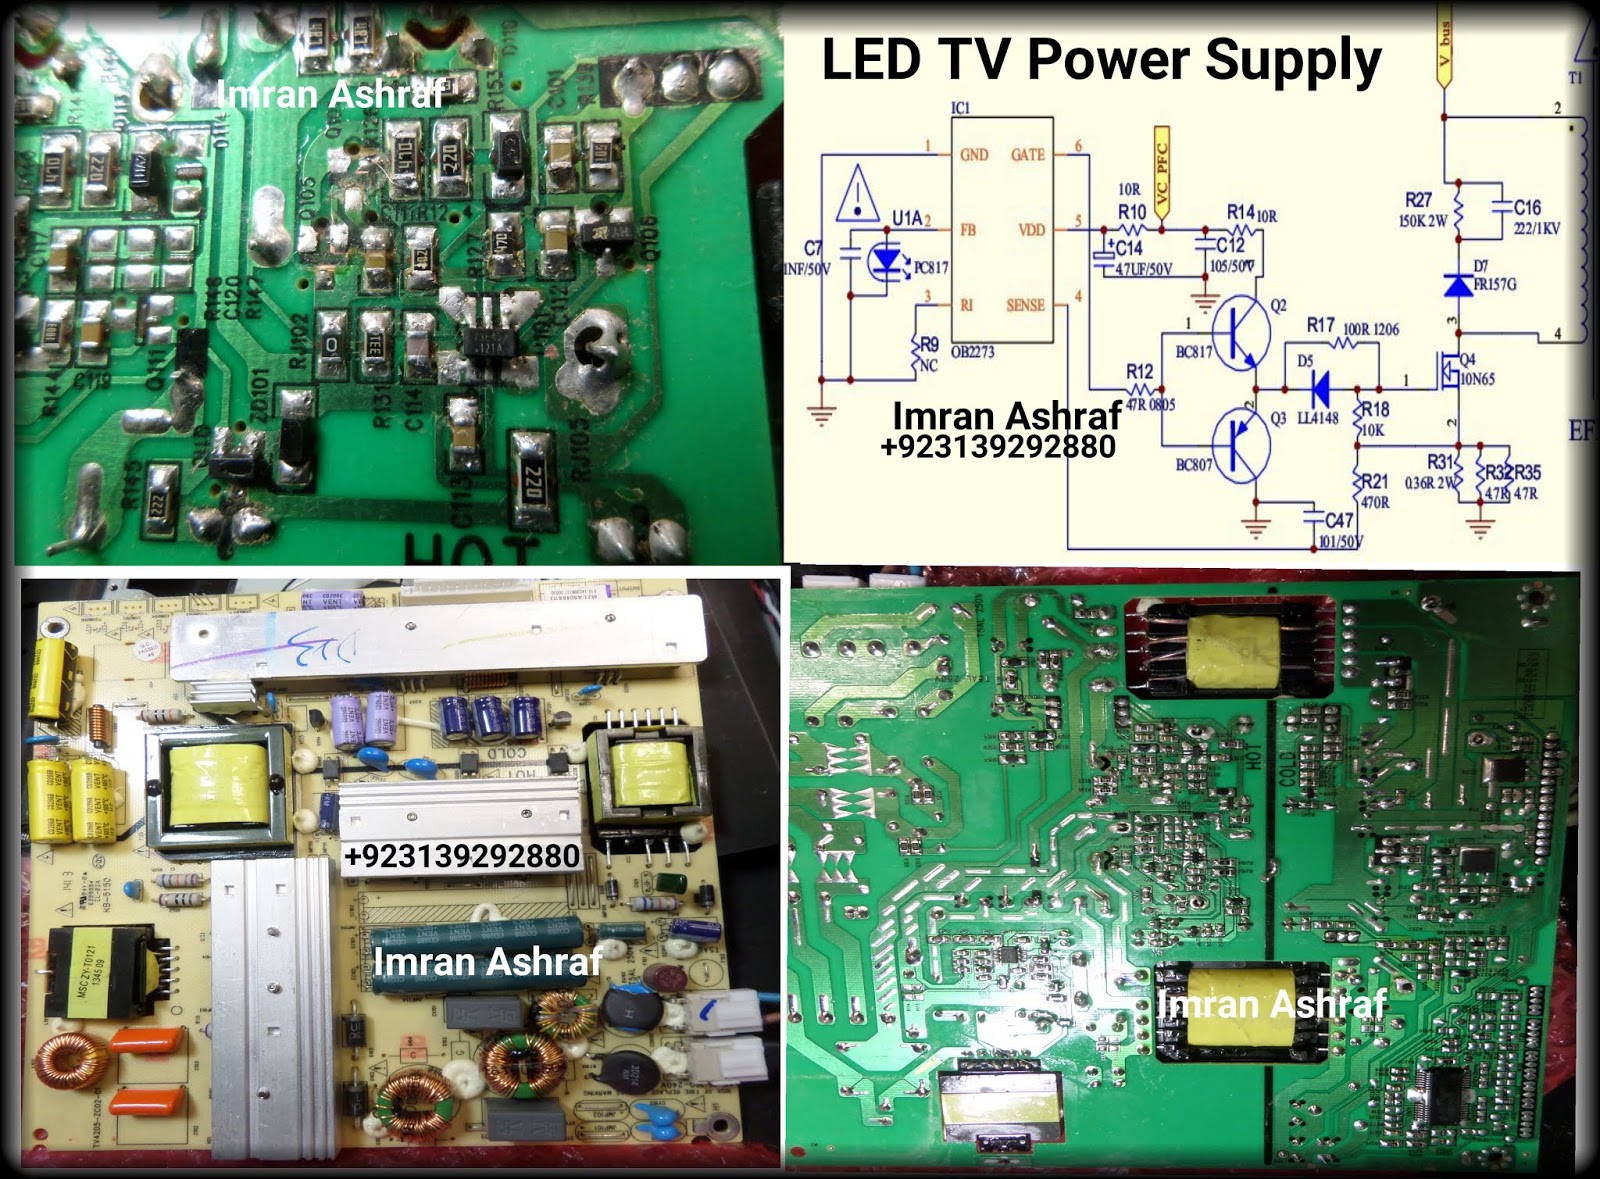 LED TV SUPPORT : LED TV Mainboard Voltages Guide